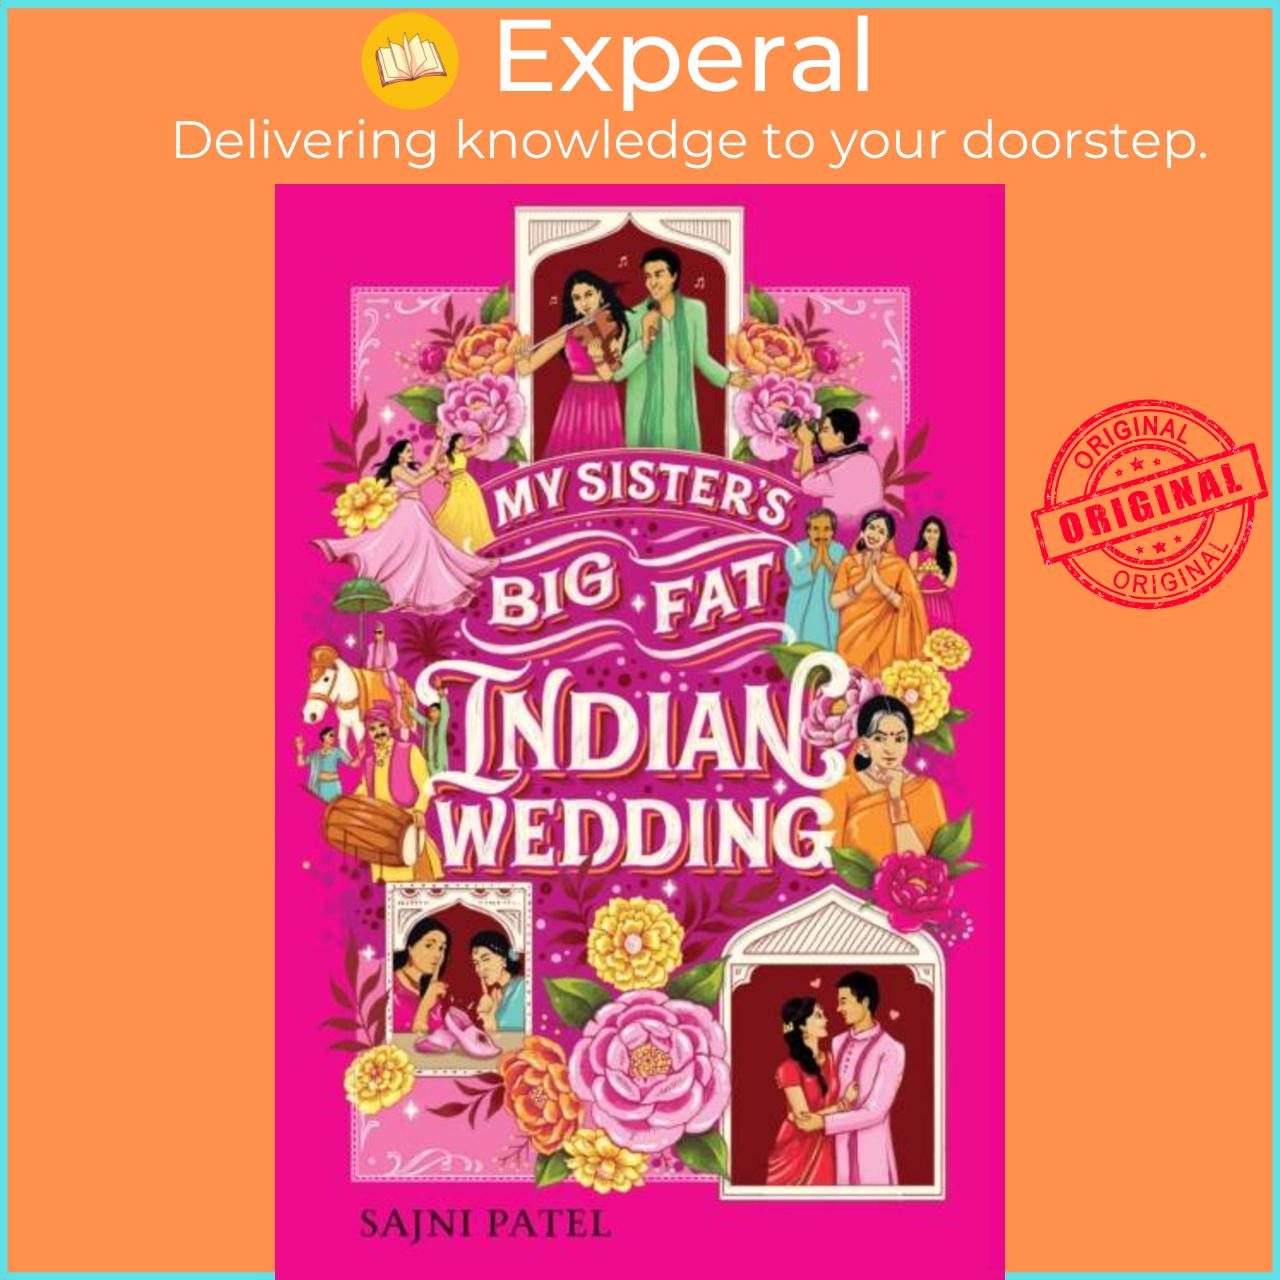 Sách - My Sister's Big Fat Indian Wedding by Sajni Patel (UK edition, paperback)